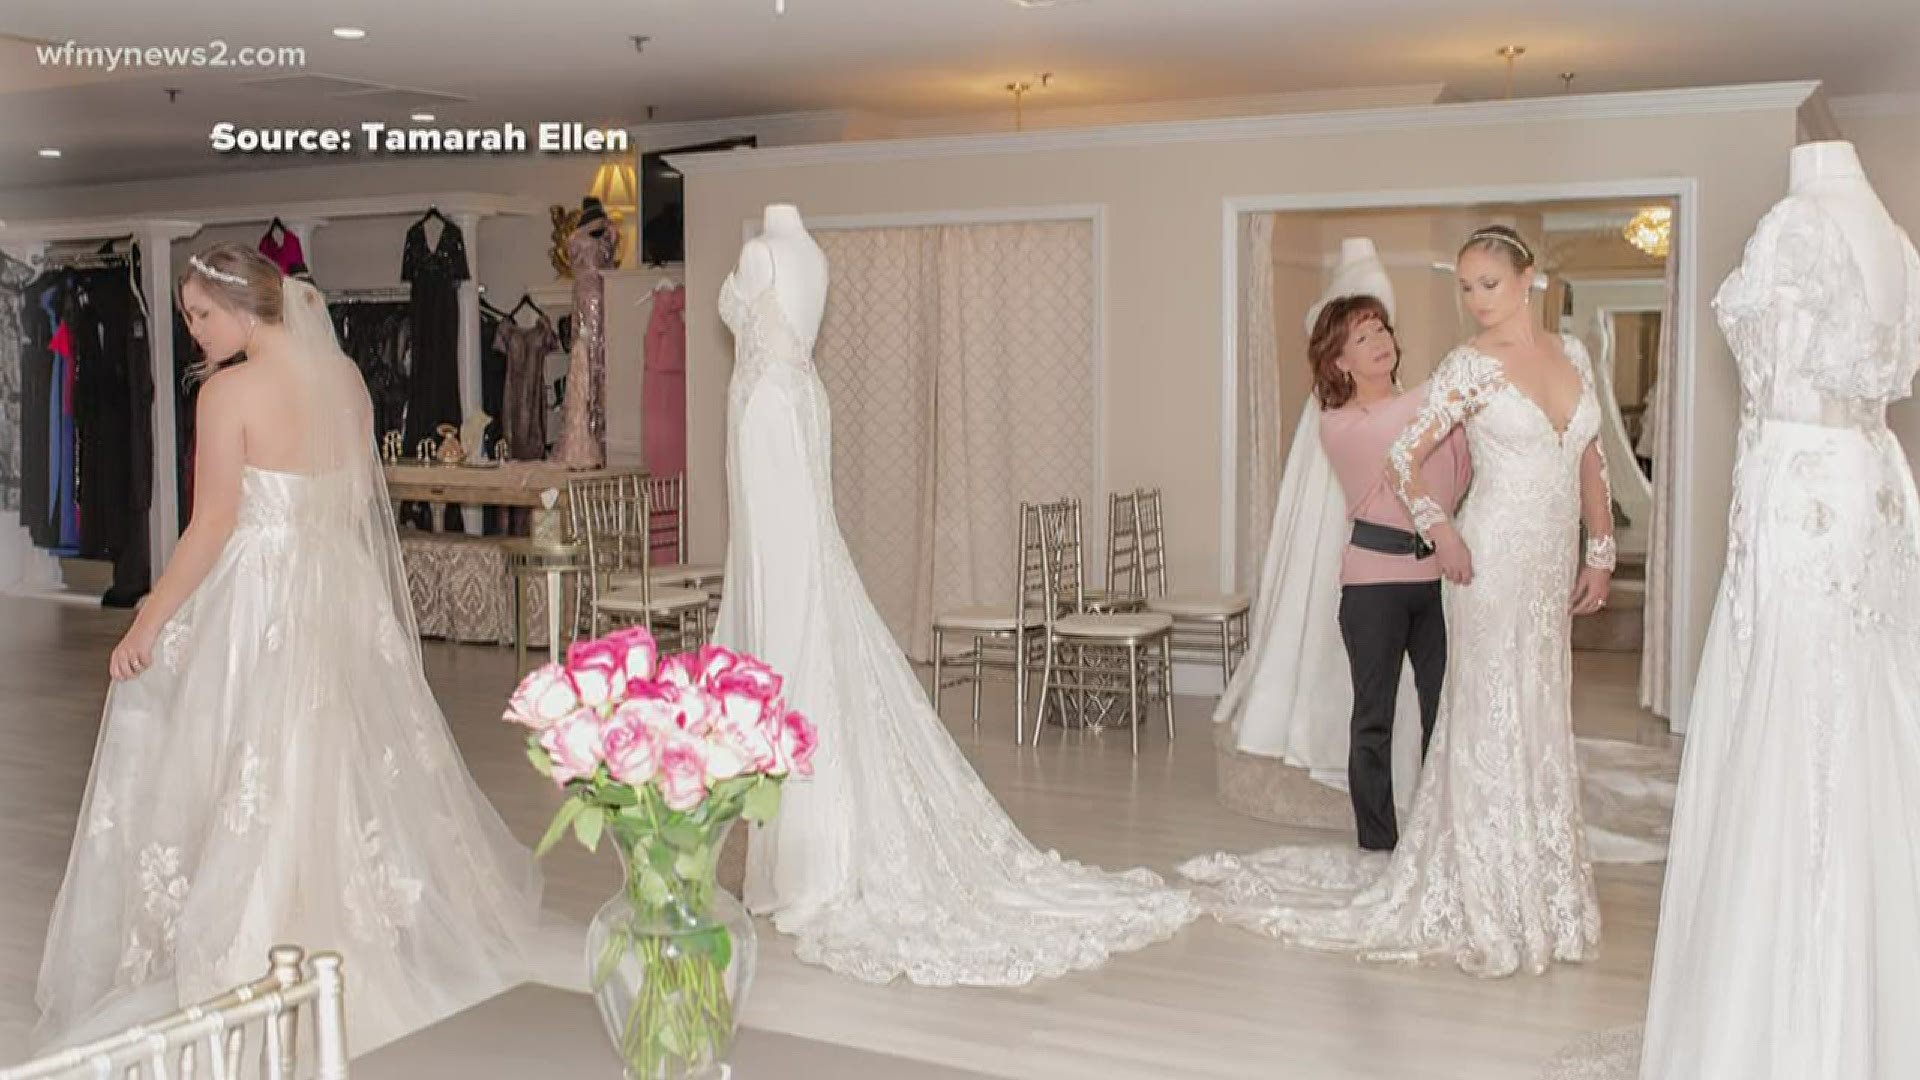 Bridal fashion news: Bravissimo to donate 10% of sales to Copp